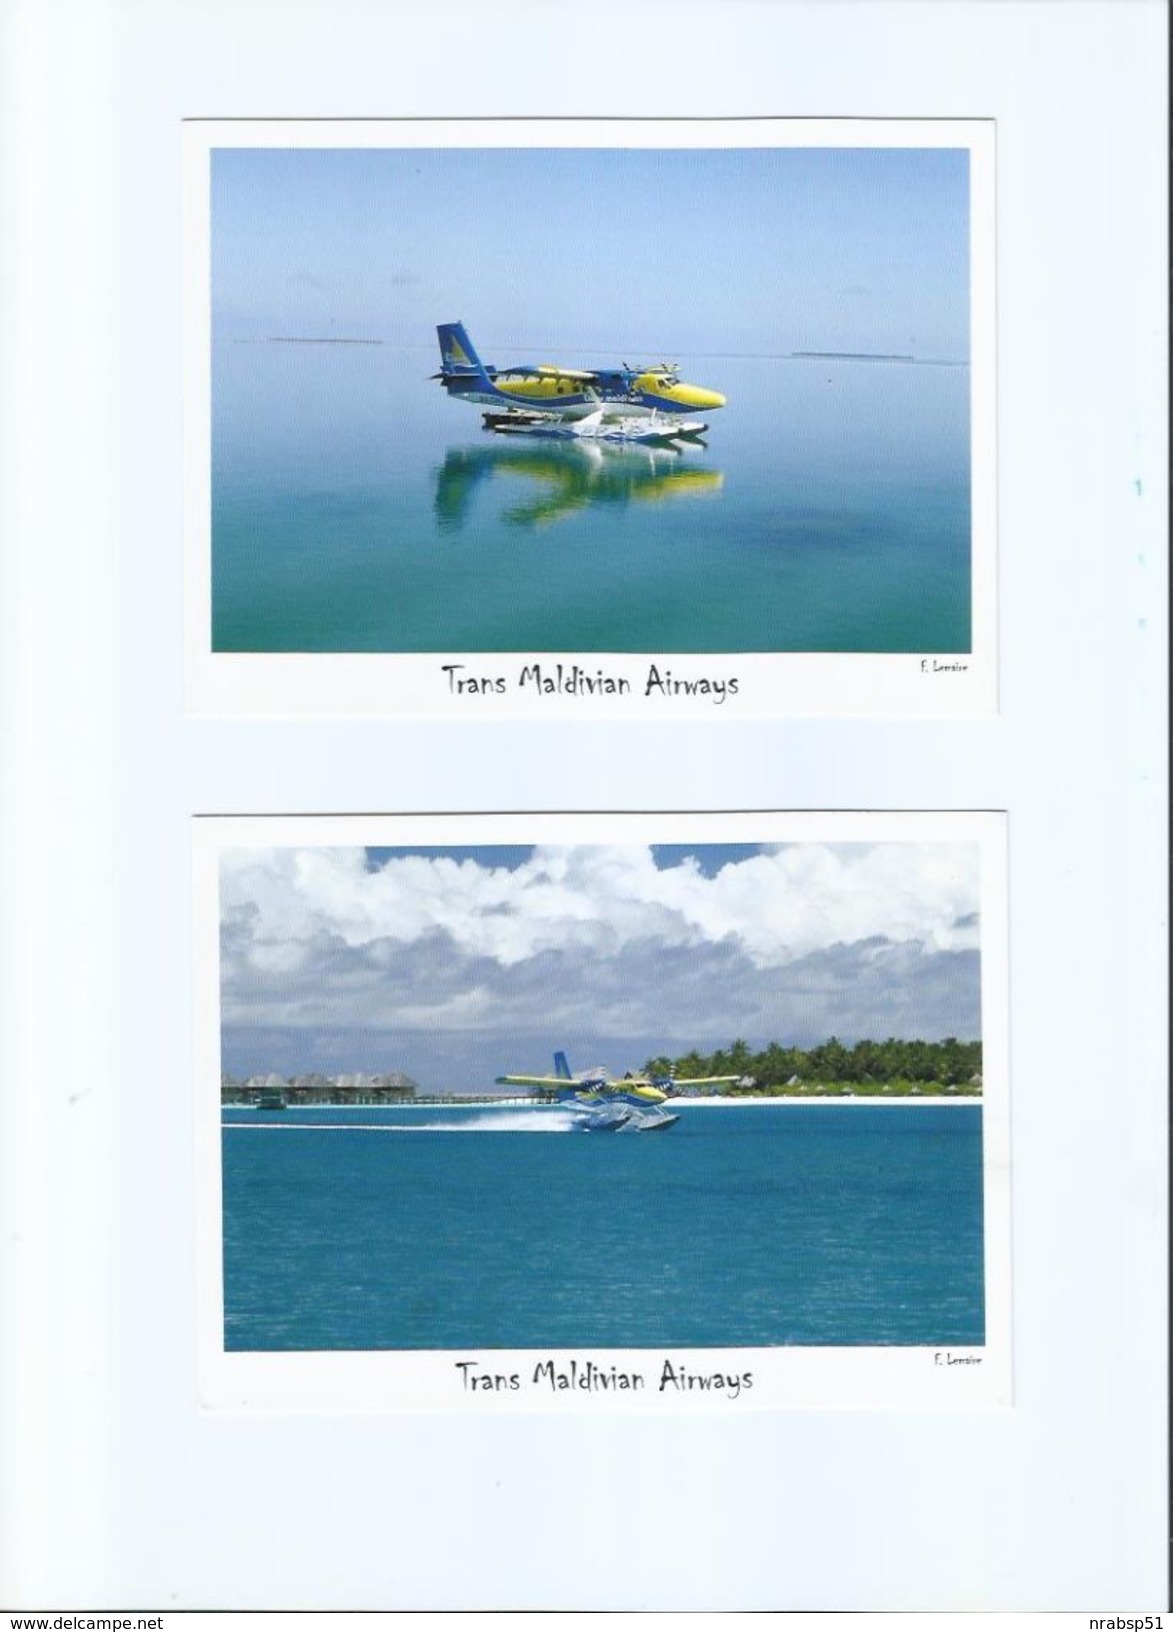 MALDIVES - ASIA - TRANS MALDIVIAN AIRWAYS - AIRPLANES - 2 POSTCARDS - Maldives